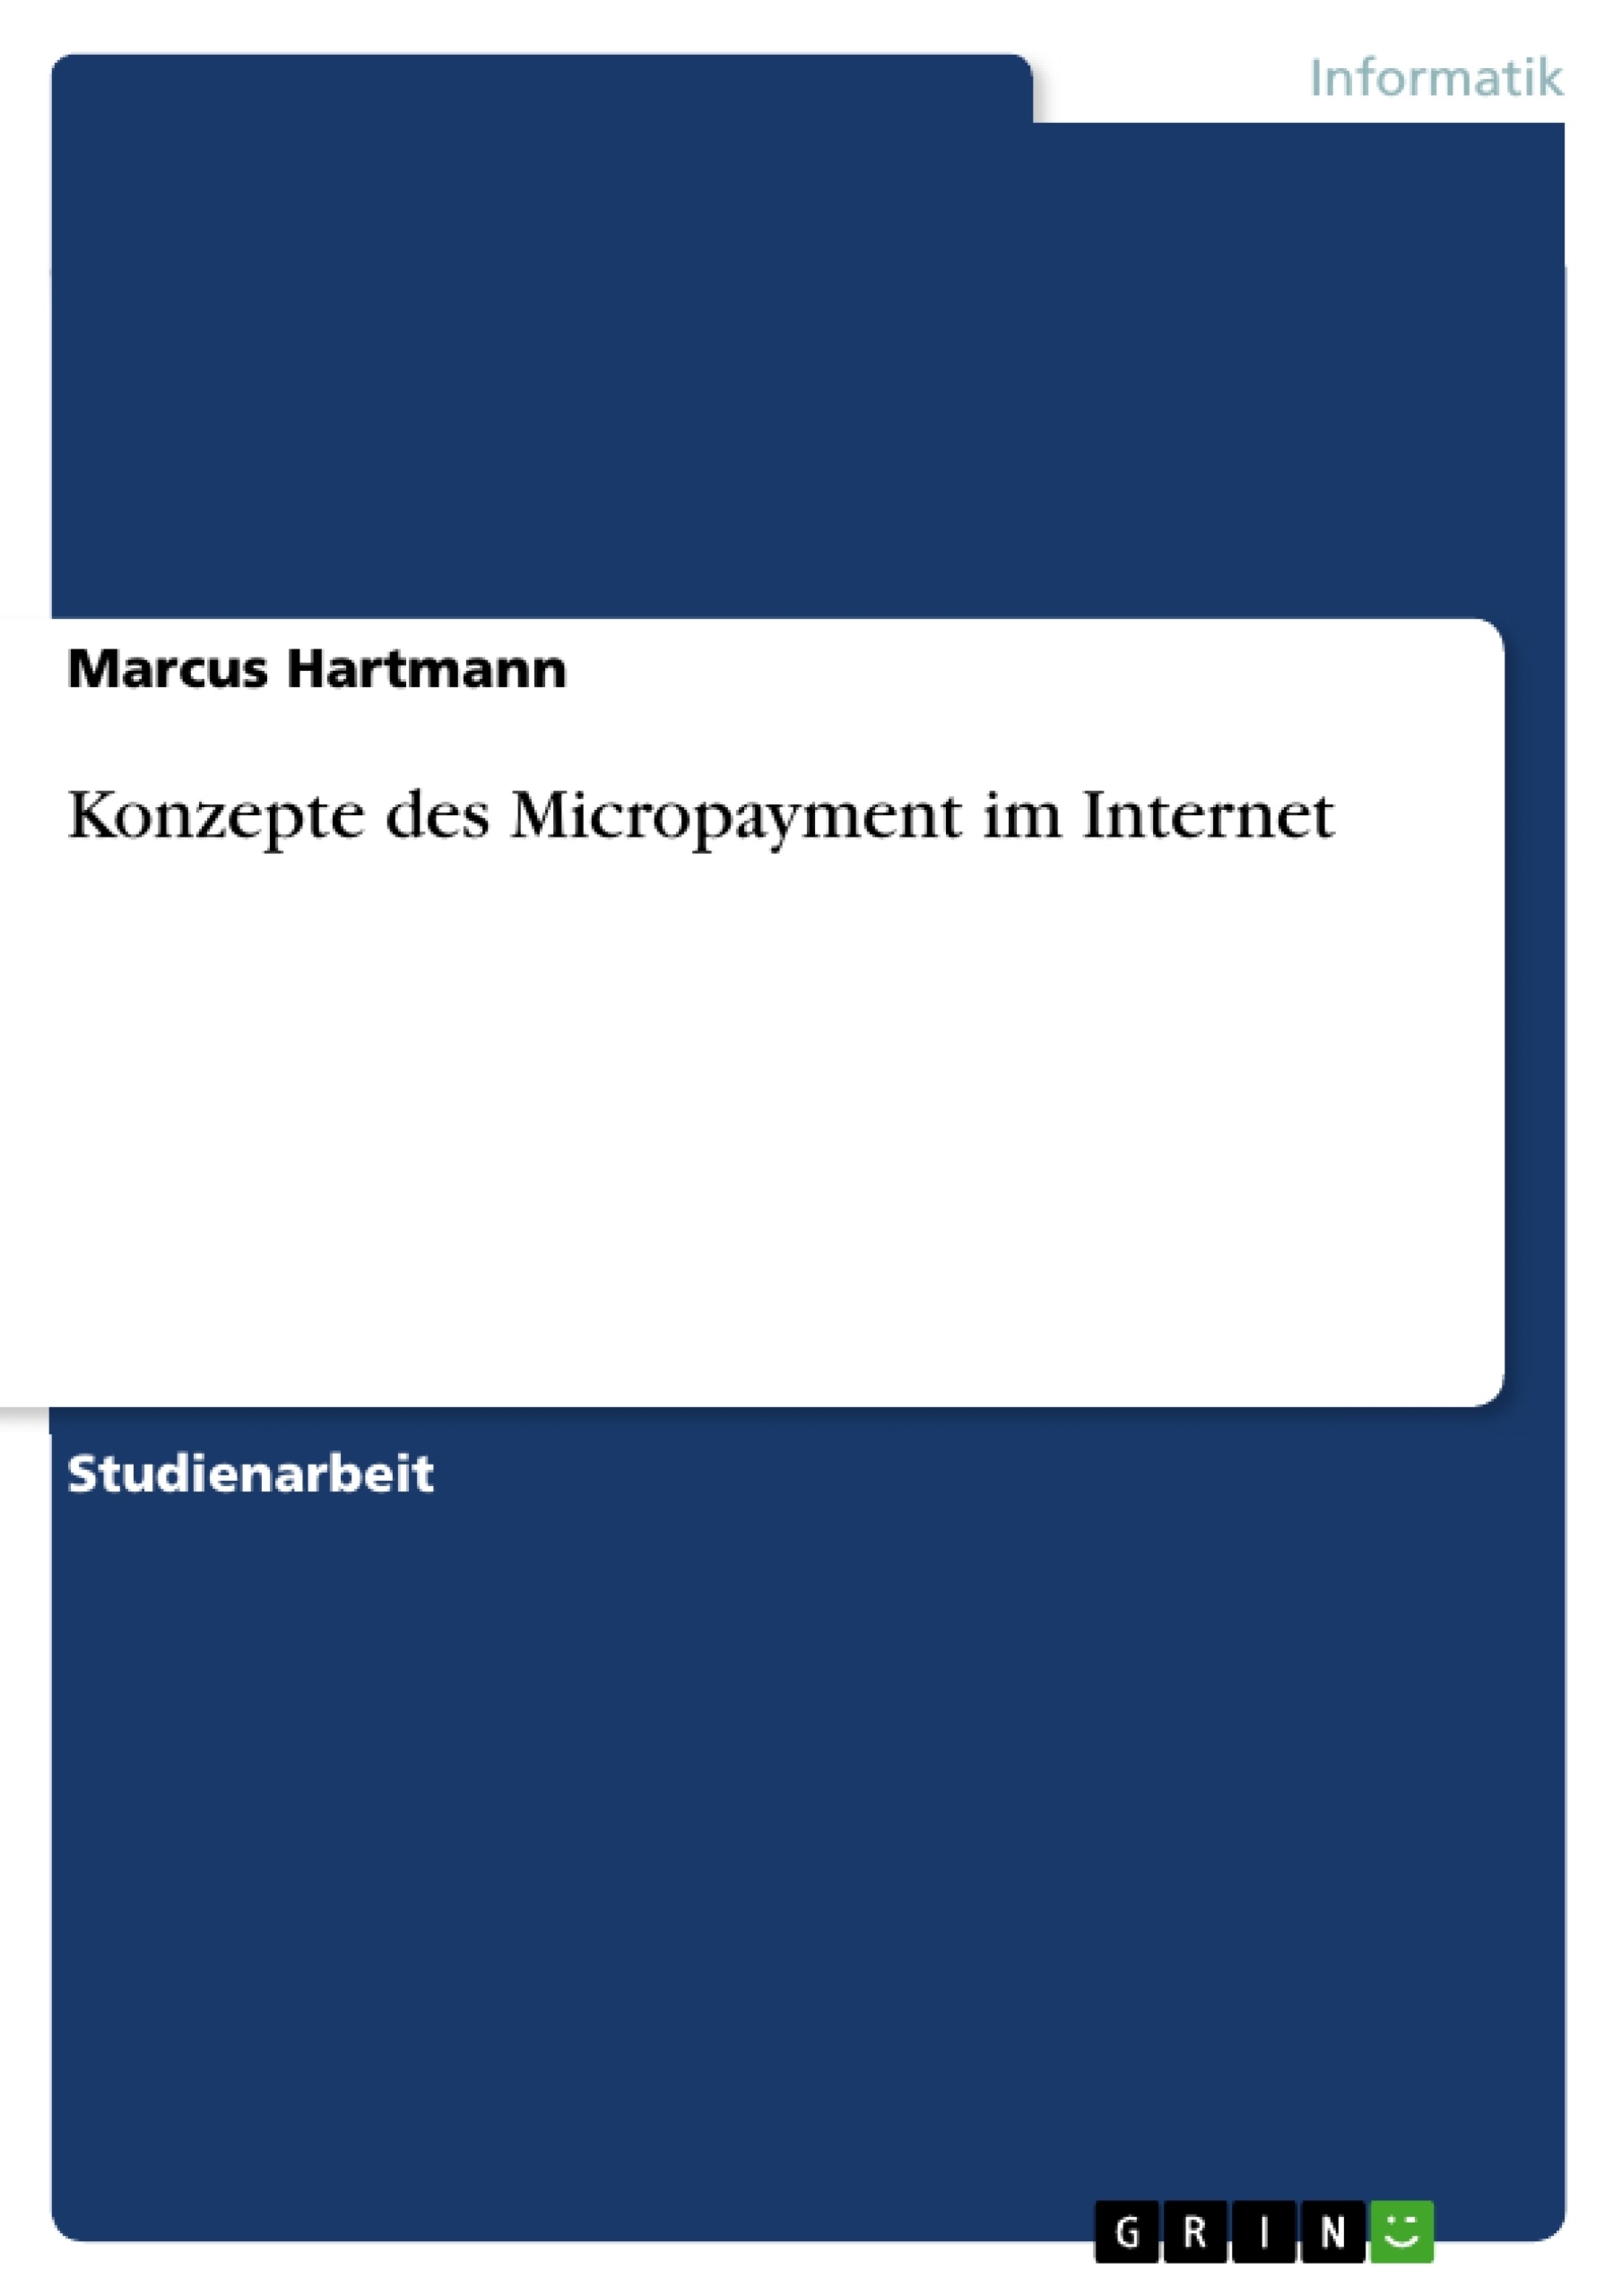 Title: Konzepte des Micropayment im Internet